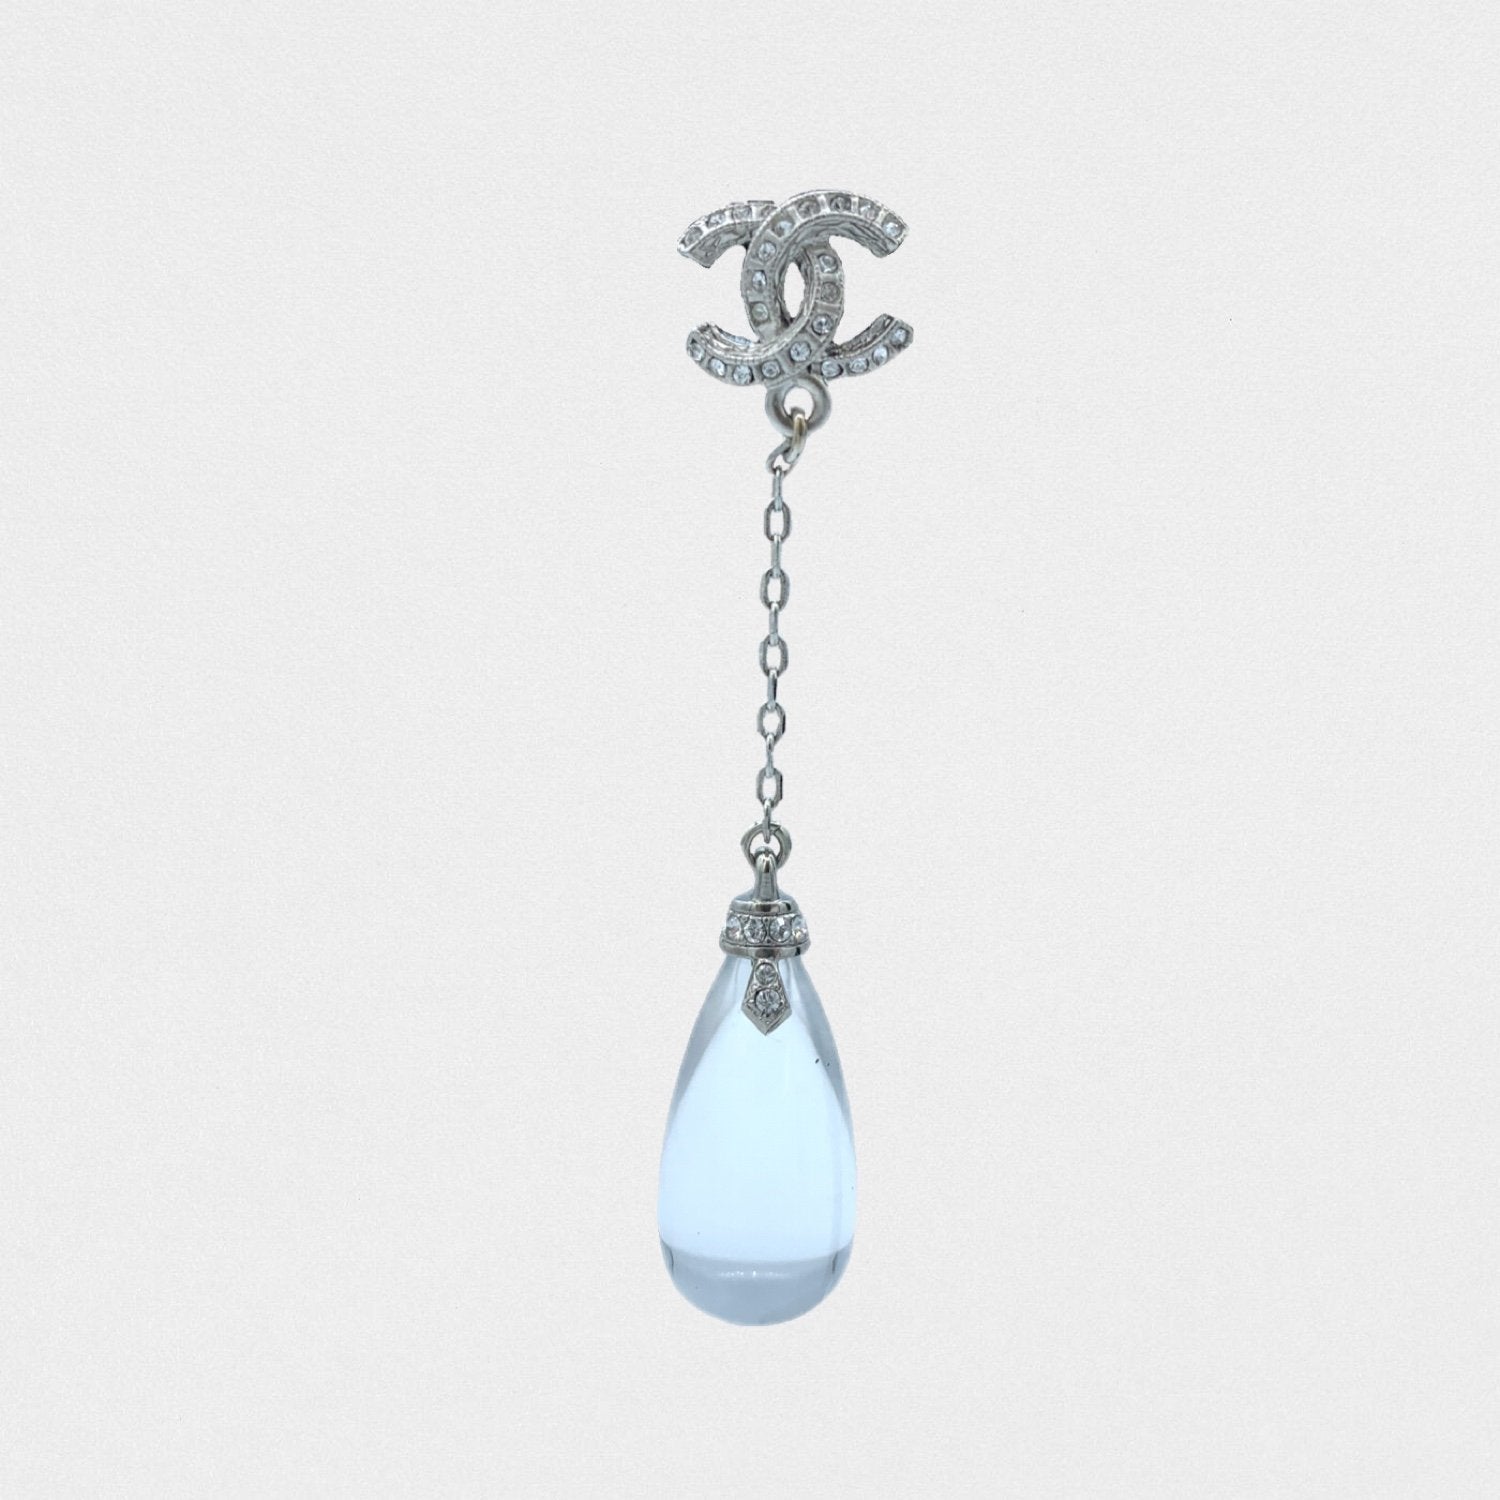 Lysis vintage Chanel water drops pendant earrings - 2010s